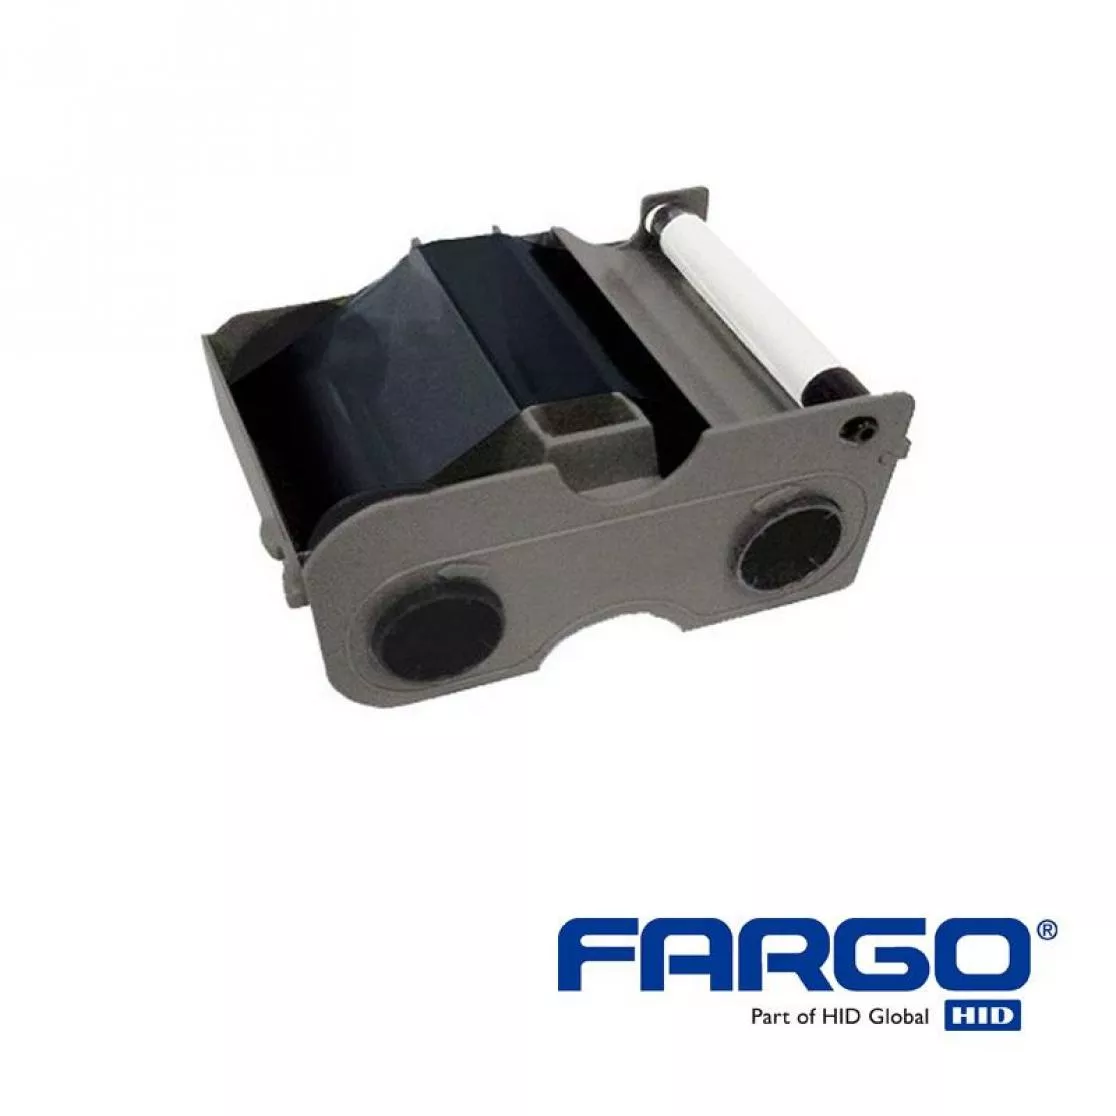 HID Fargo Kartendrucker DTC4500e Farbband schwarz